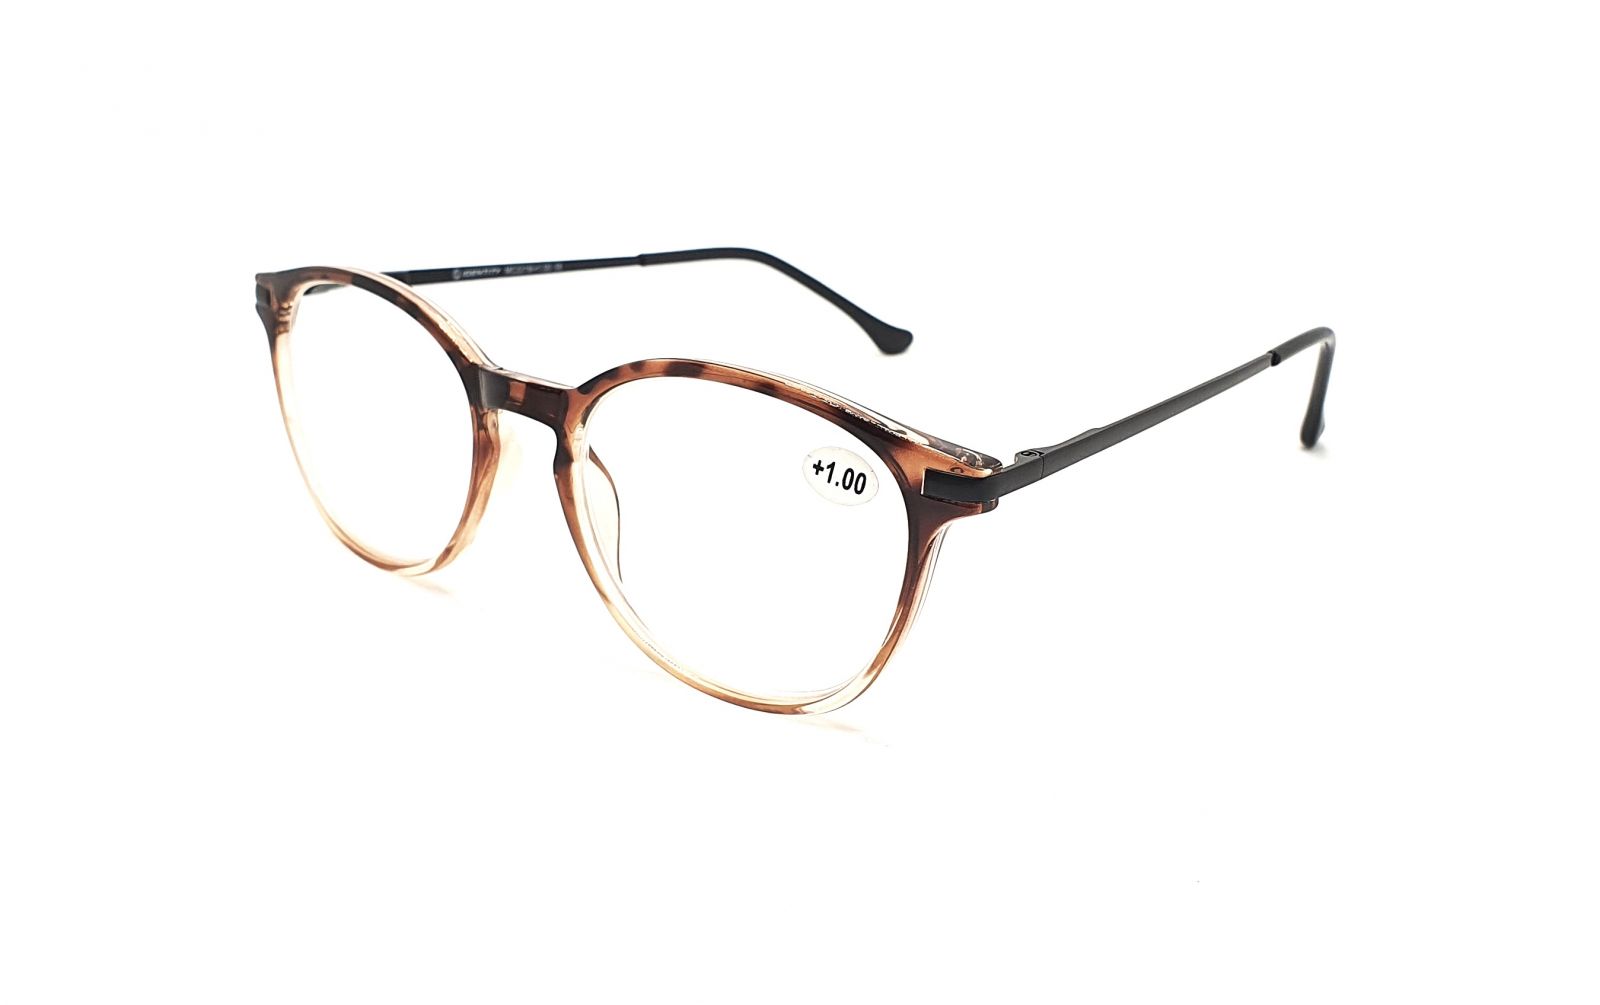 Dioptrické brýle MC2219 +3,50 flex brown